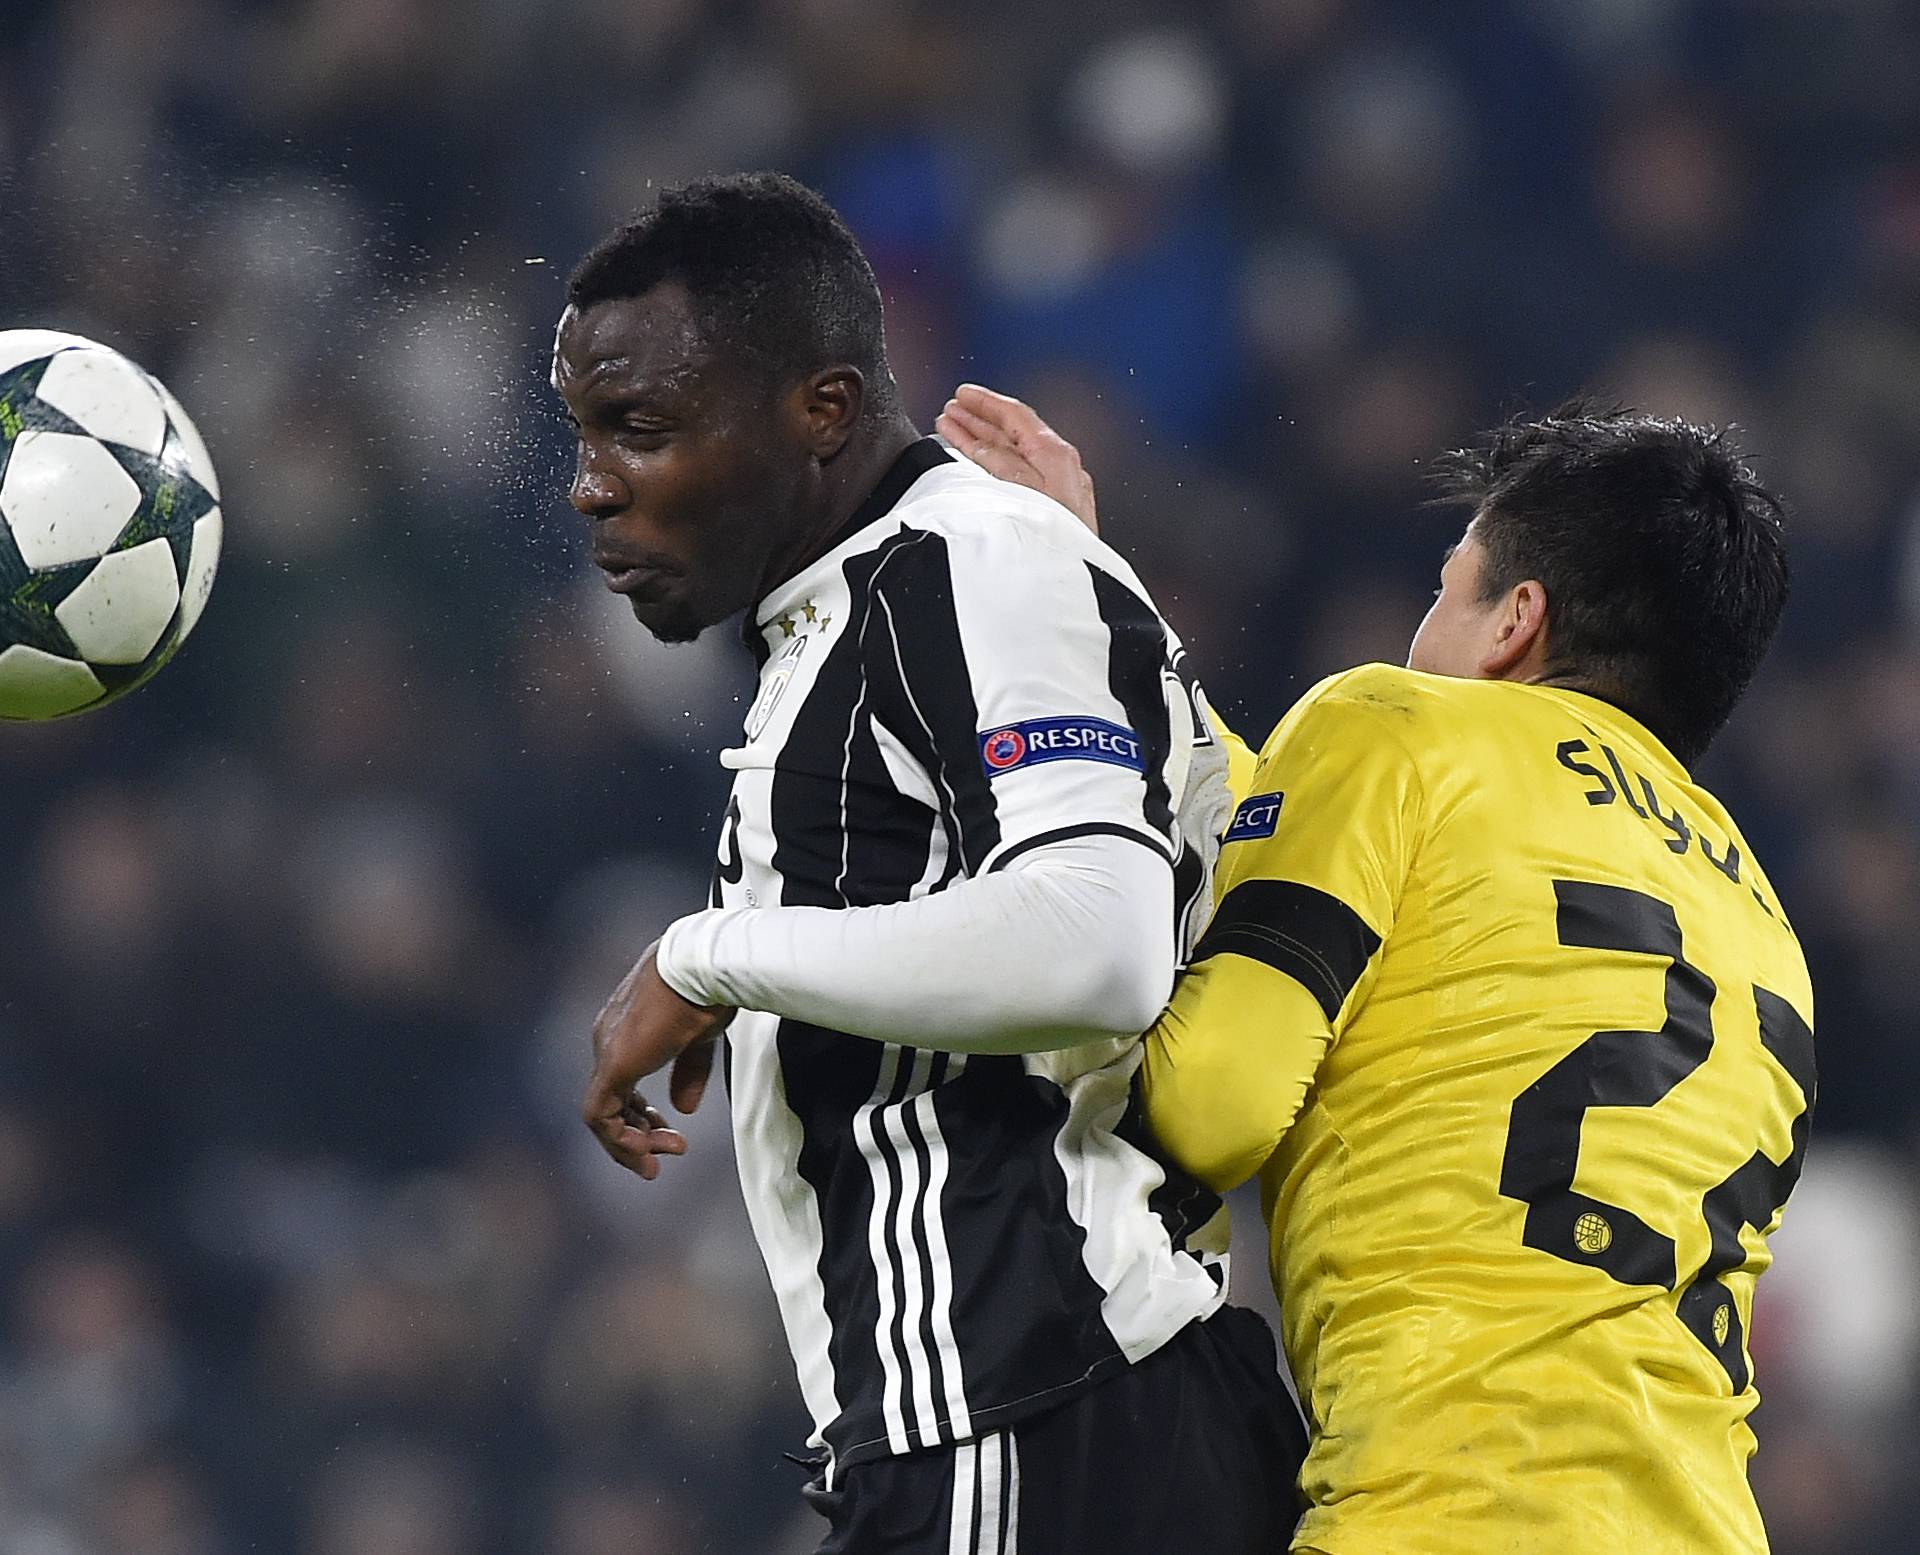 Juventus' Kwadwo Asamoah in action with Dinamo Zagreb's Leonardo Sigali